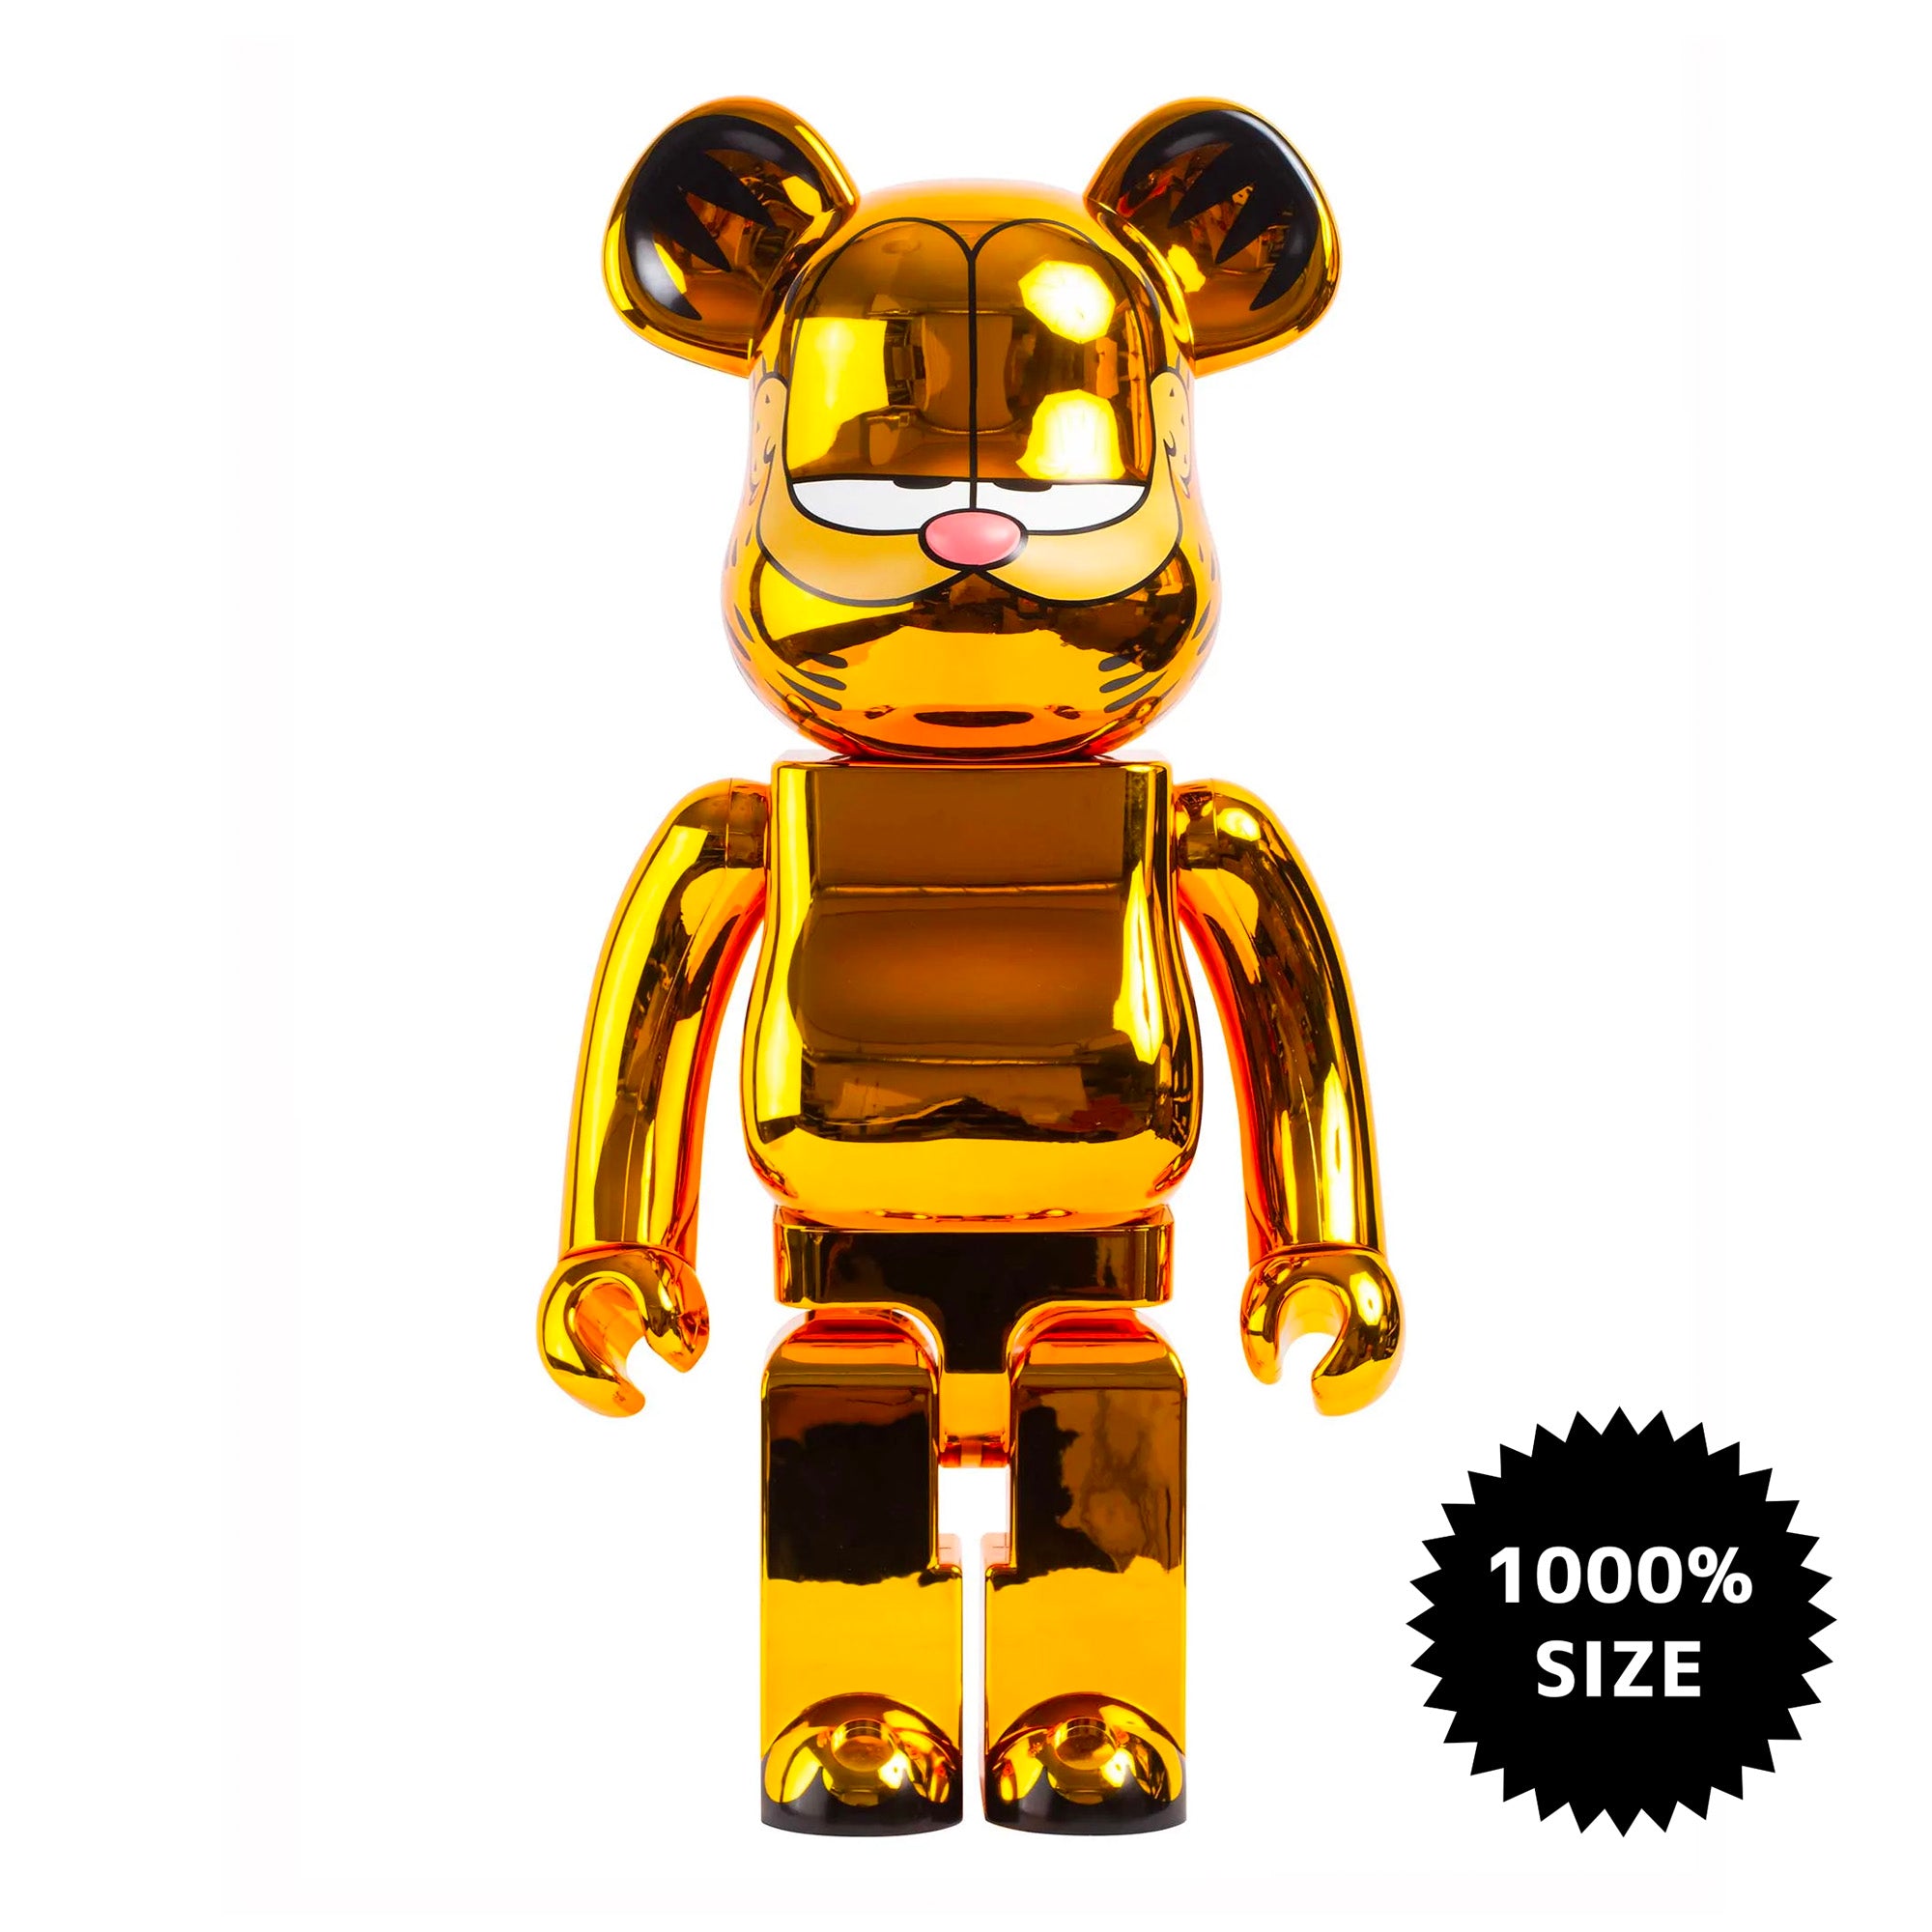 MEDICOM TOY: BE@RBRICK - Garfield Gold Chrome 1000 